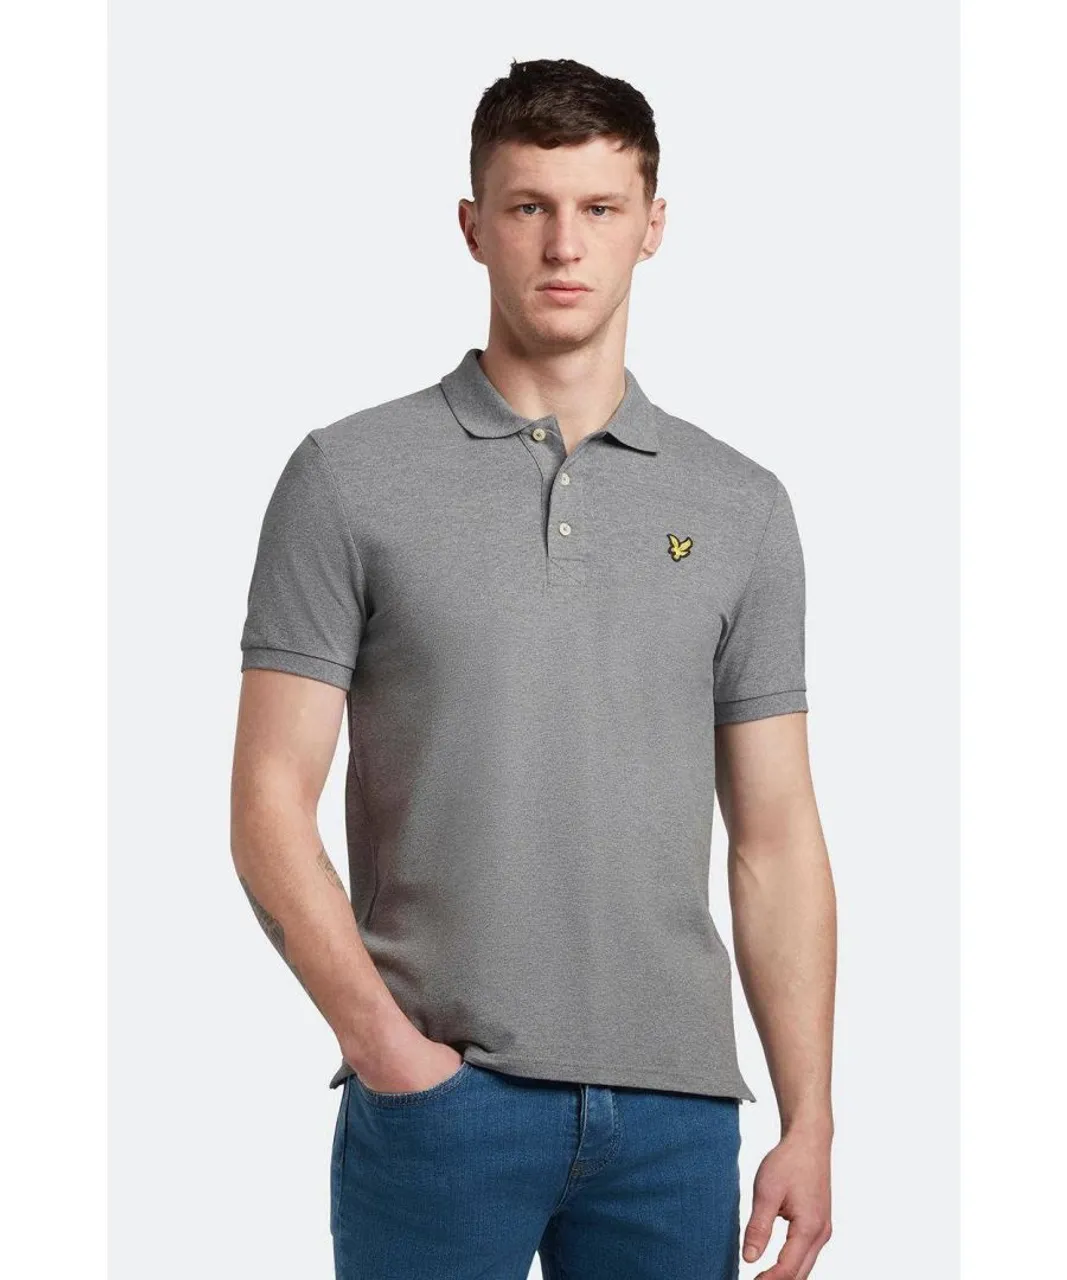 Lyle & Scott Mens Plain Polo Shirt in Grey Cotton